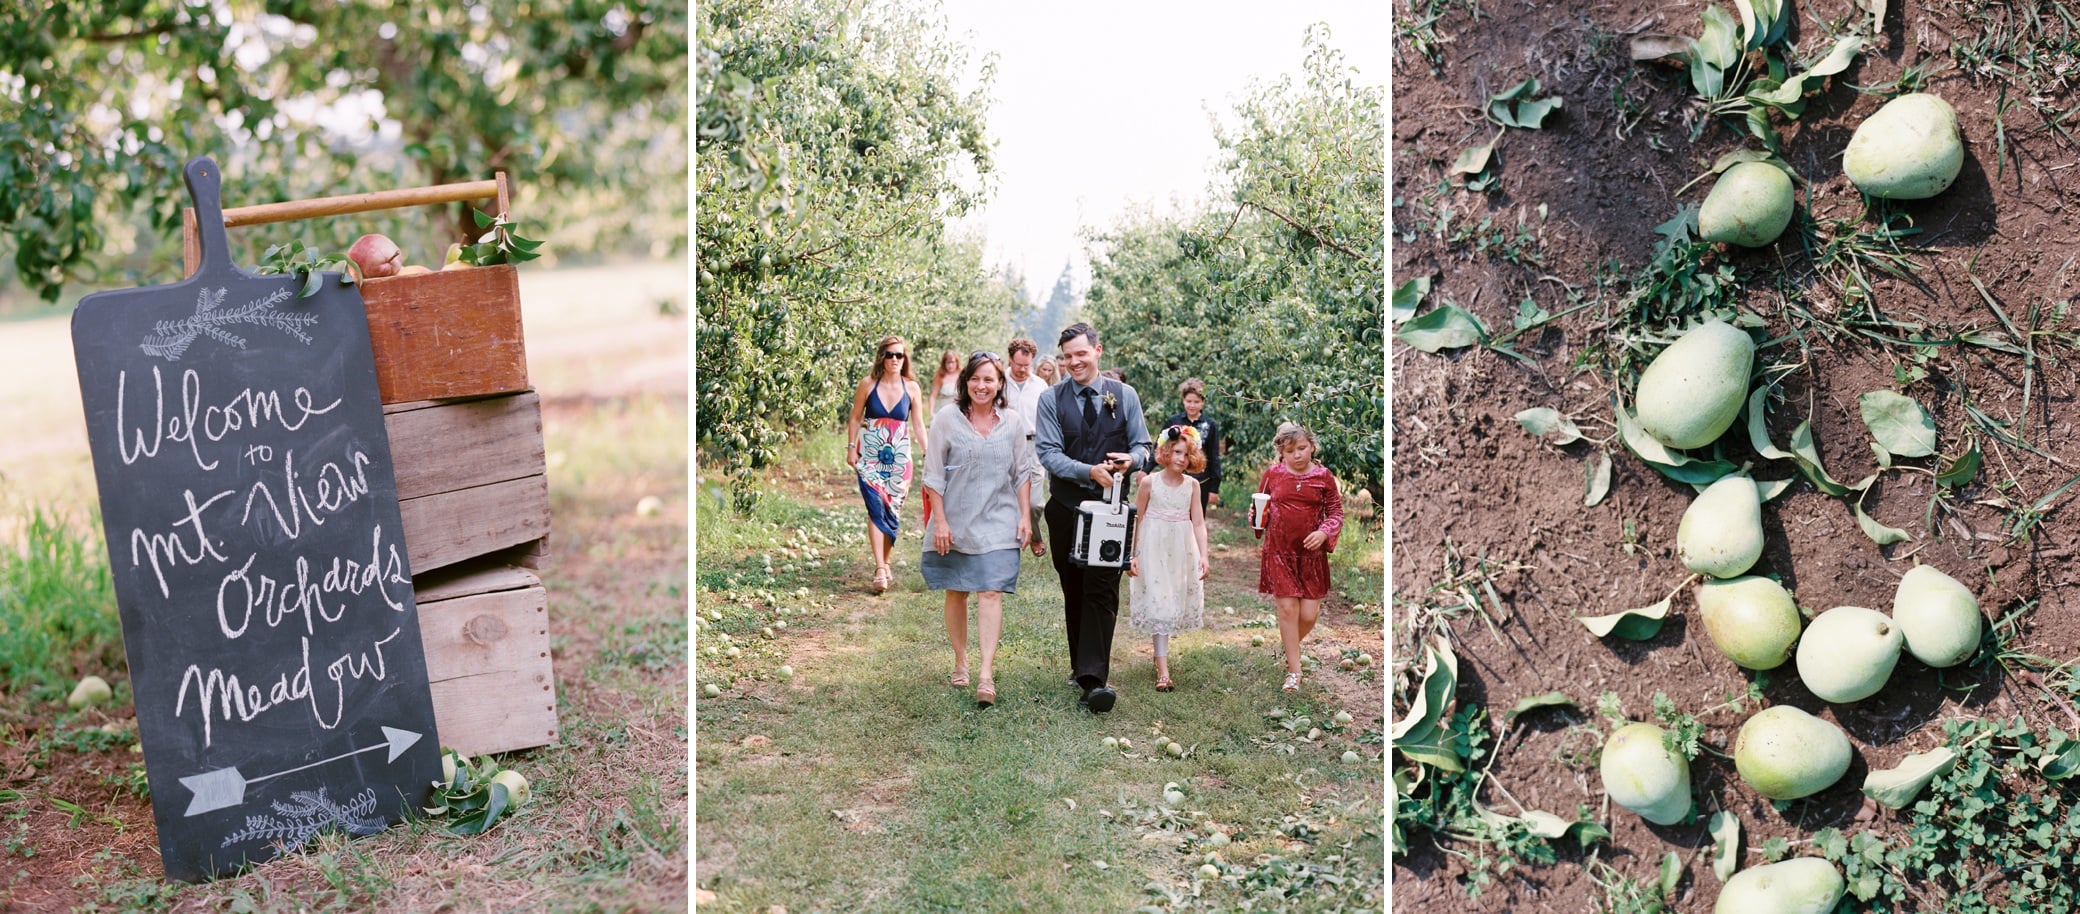 Hood River wedding photographer, orchard wedding, Mt. View, wedding details, Simply splendid